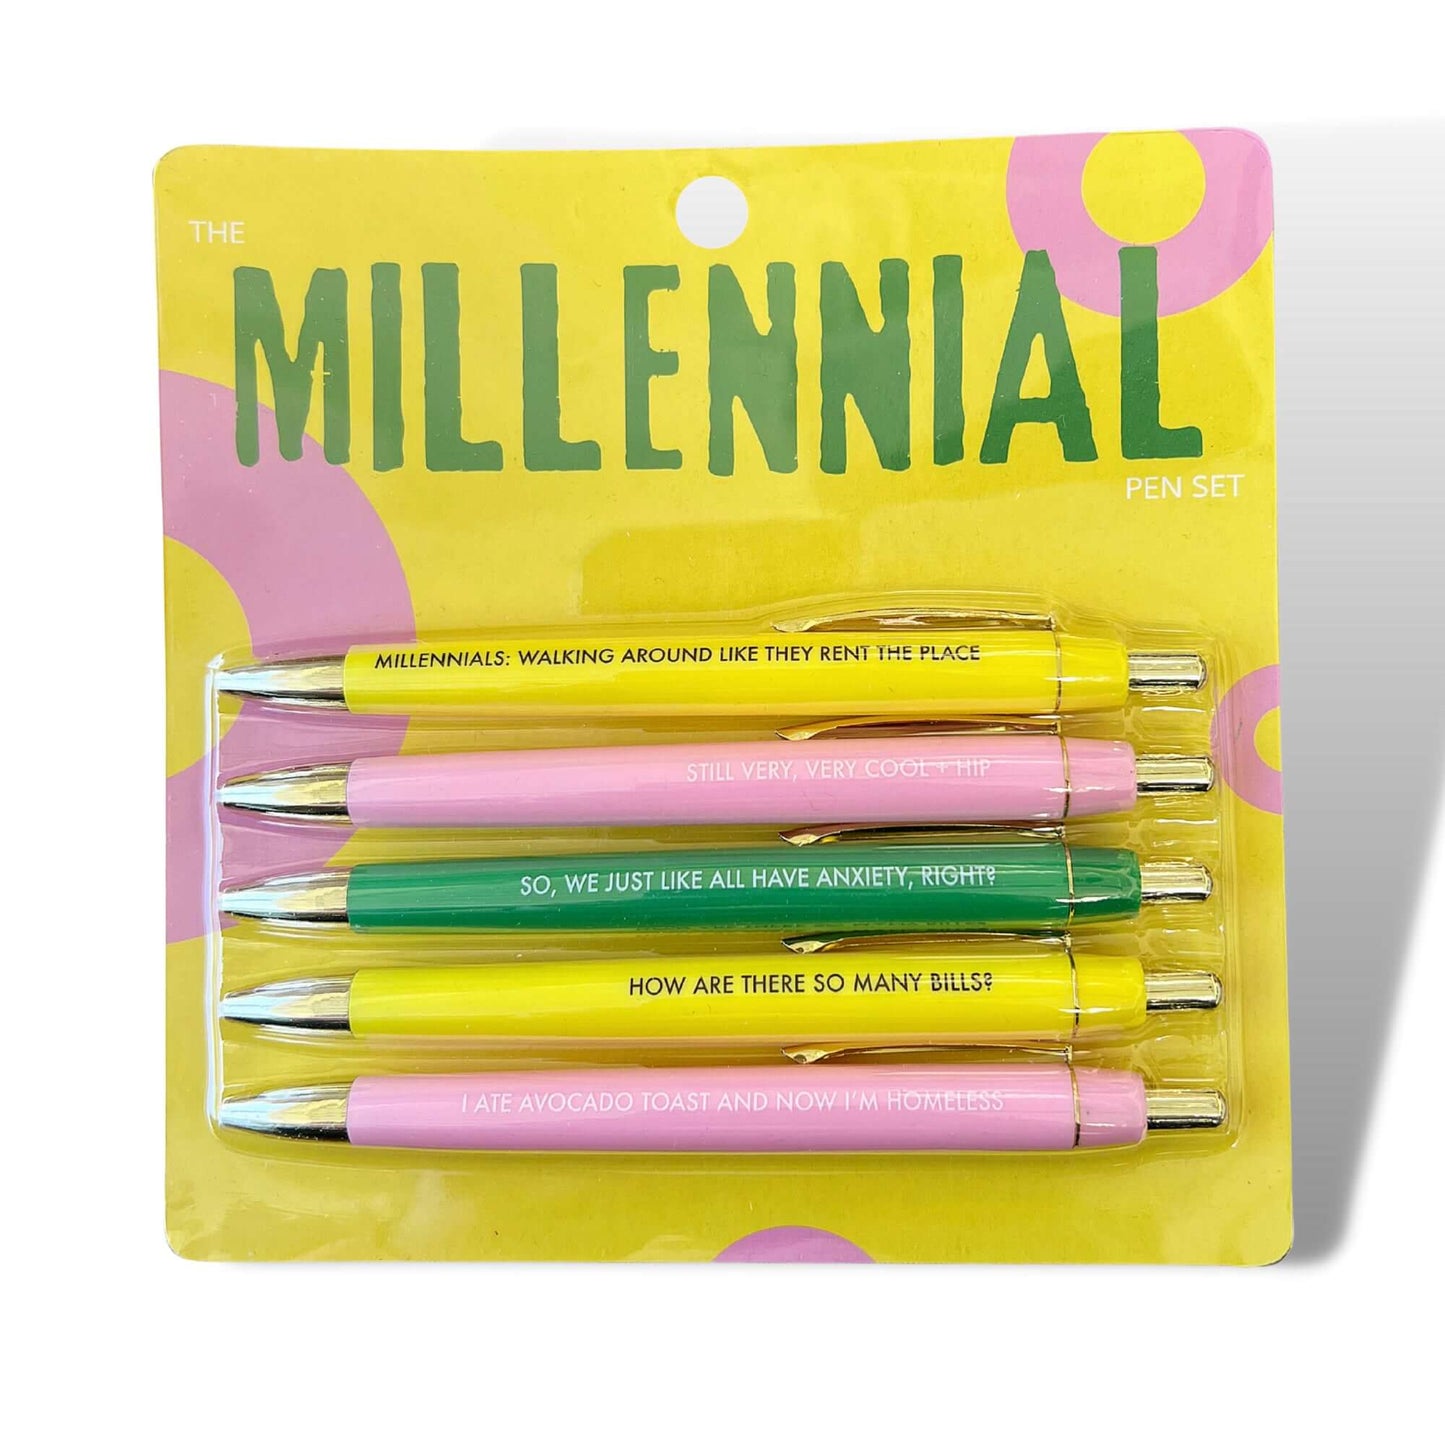 Fun Club Millennial Funny Novelty Pen Set Pen Set Fun Club